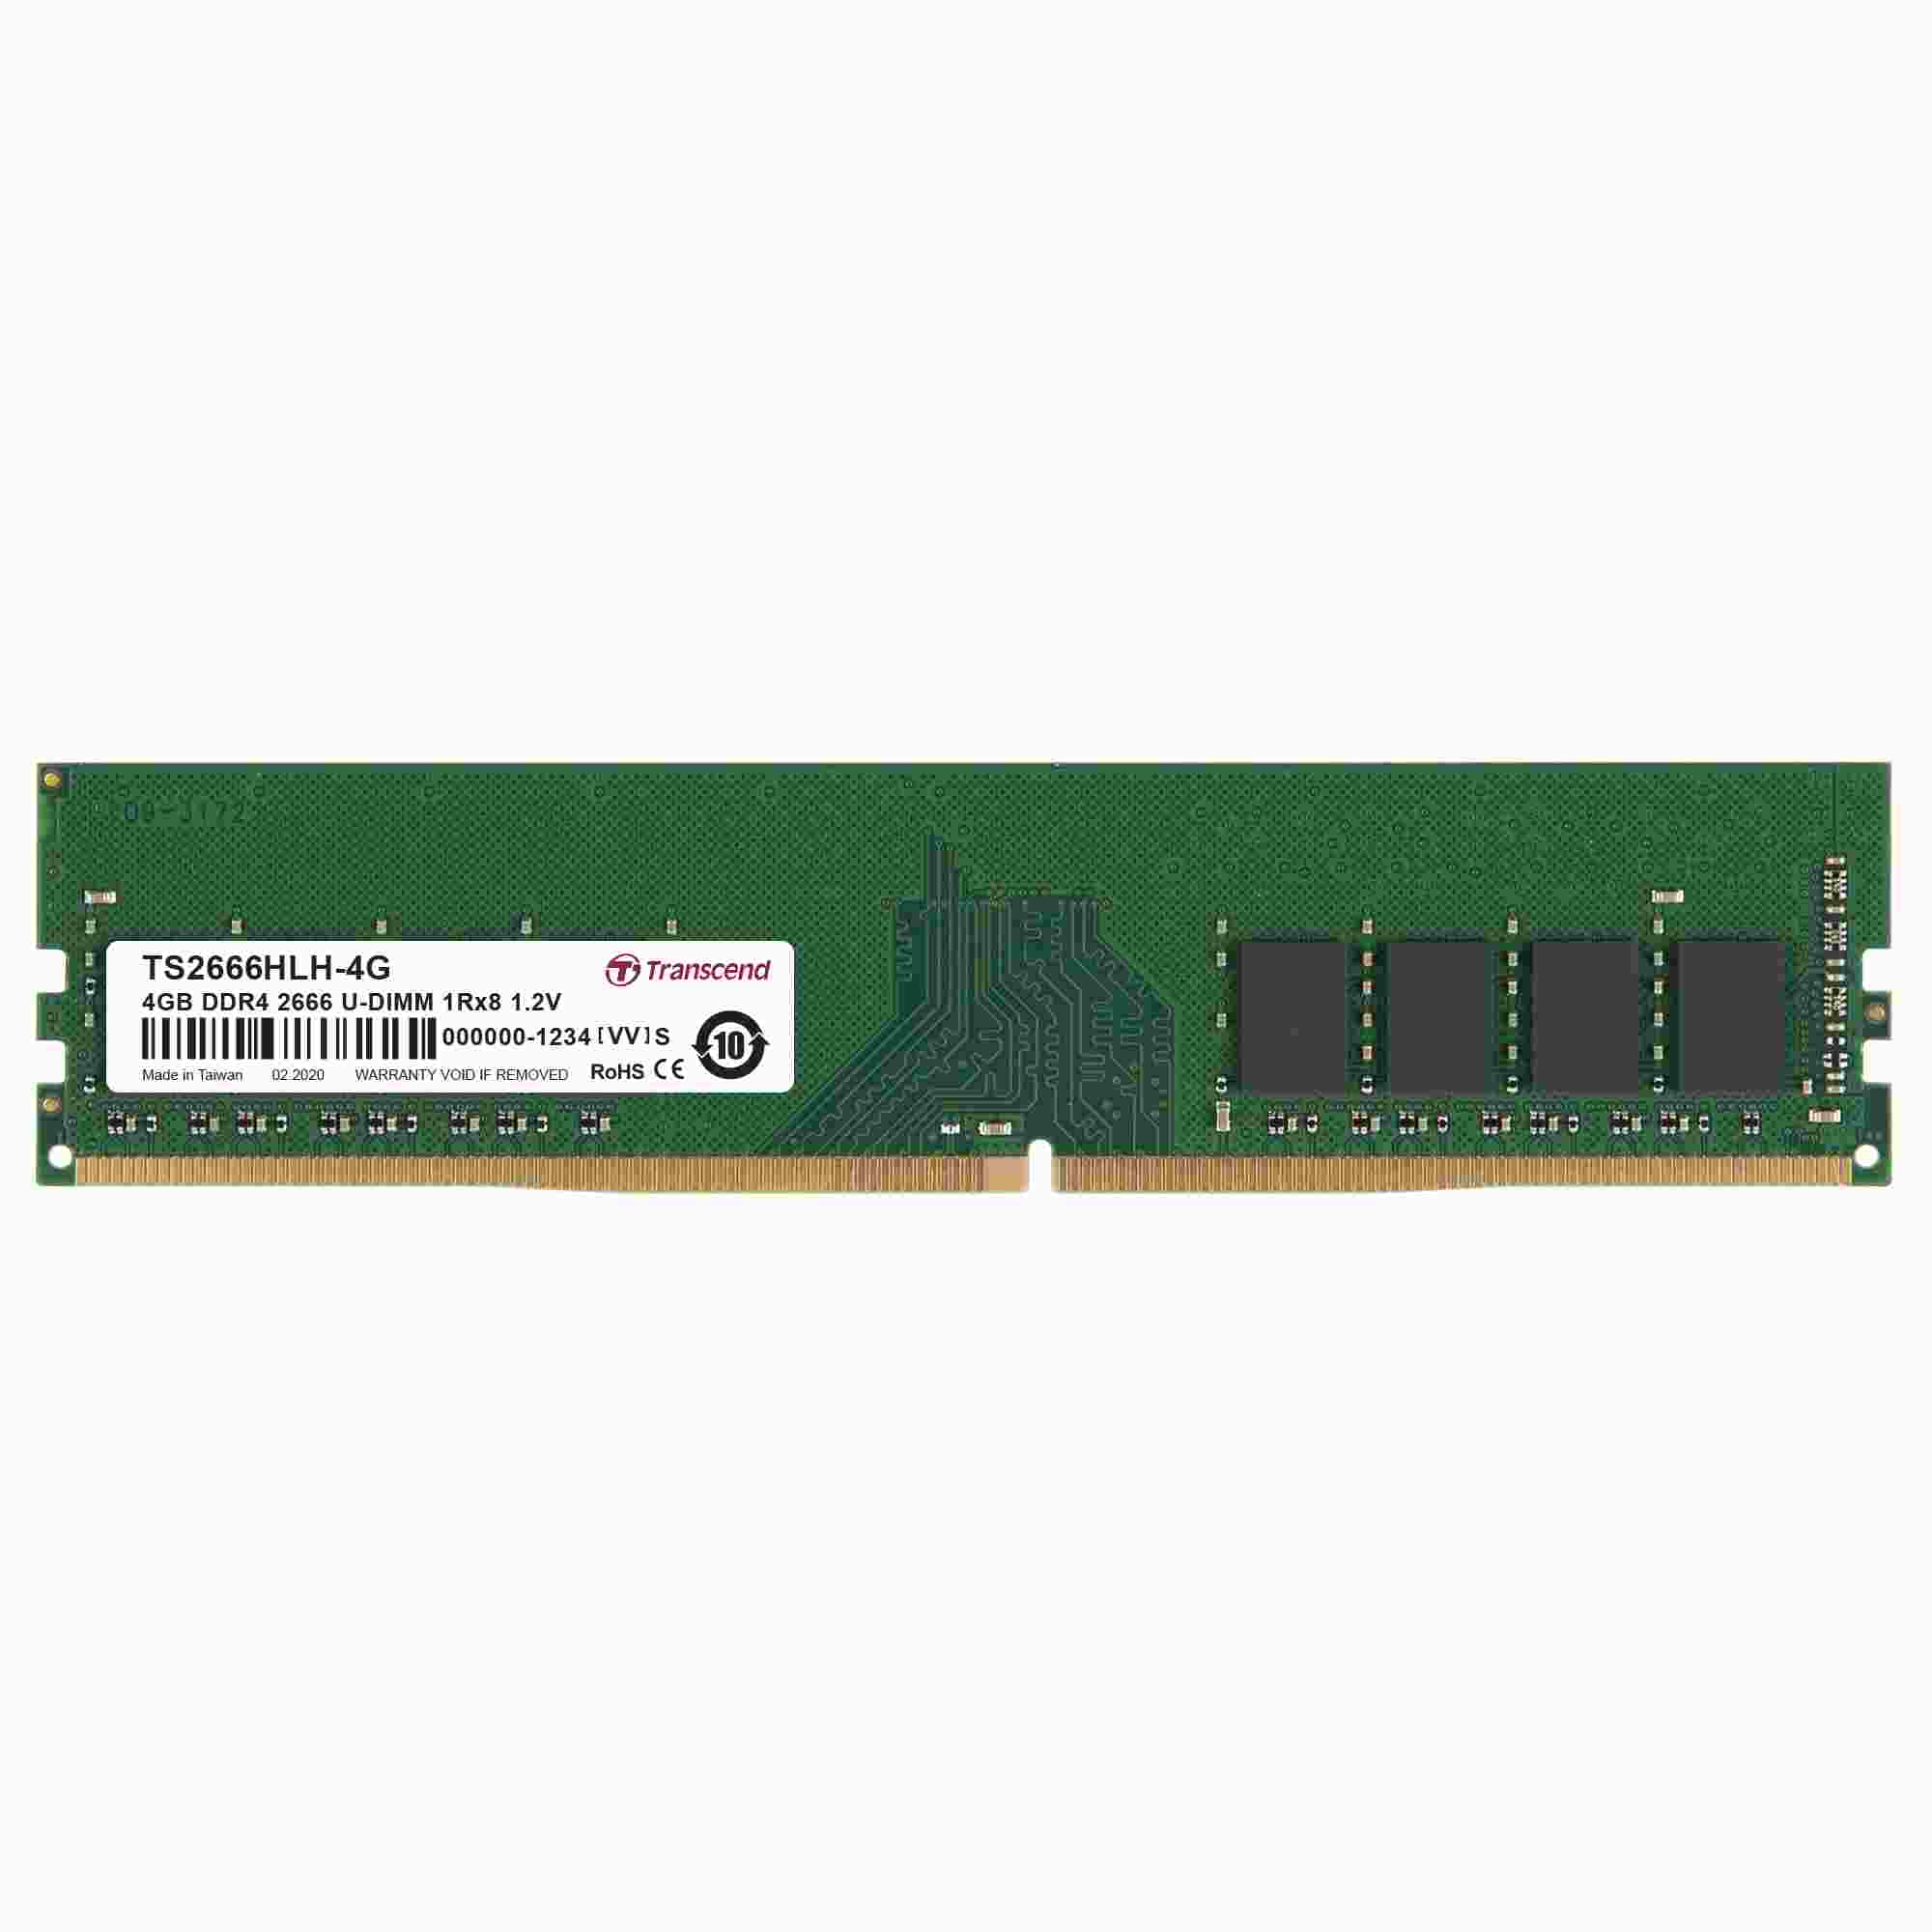 DIMM DDR4 4GB 2666MHz TRANSCEND 1Rx8 512Mx8 CL19 1.2V0 